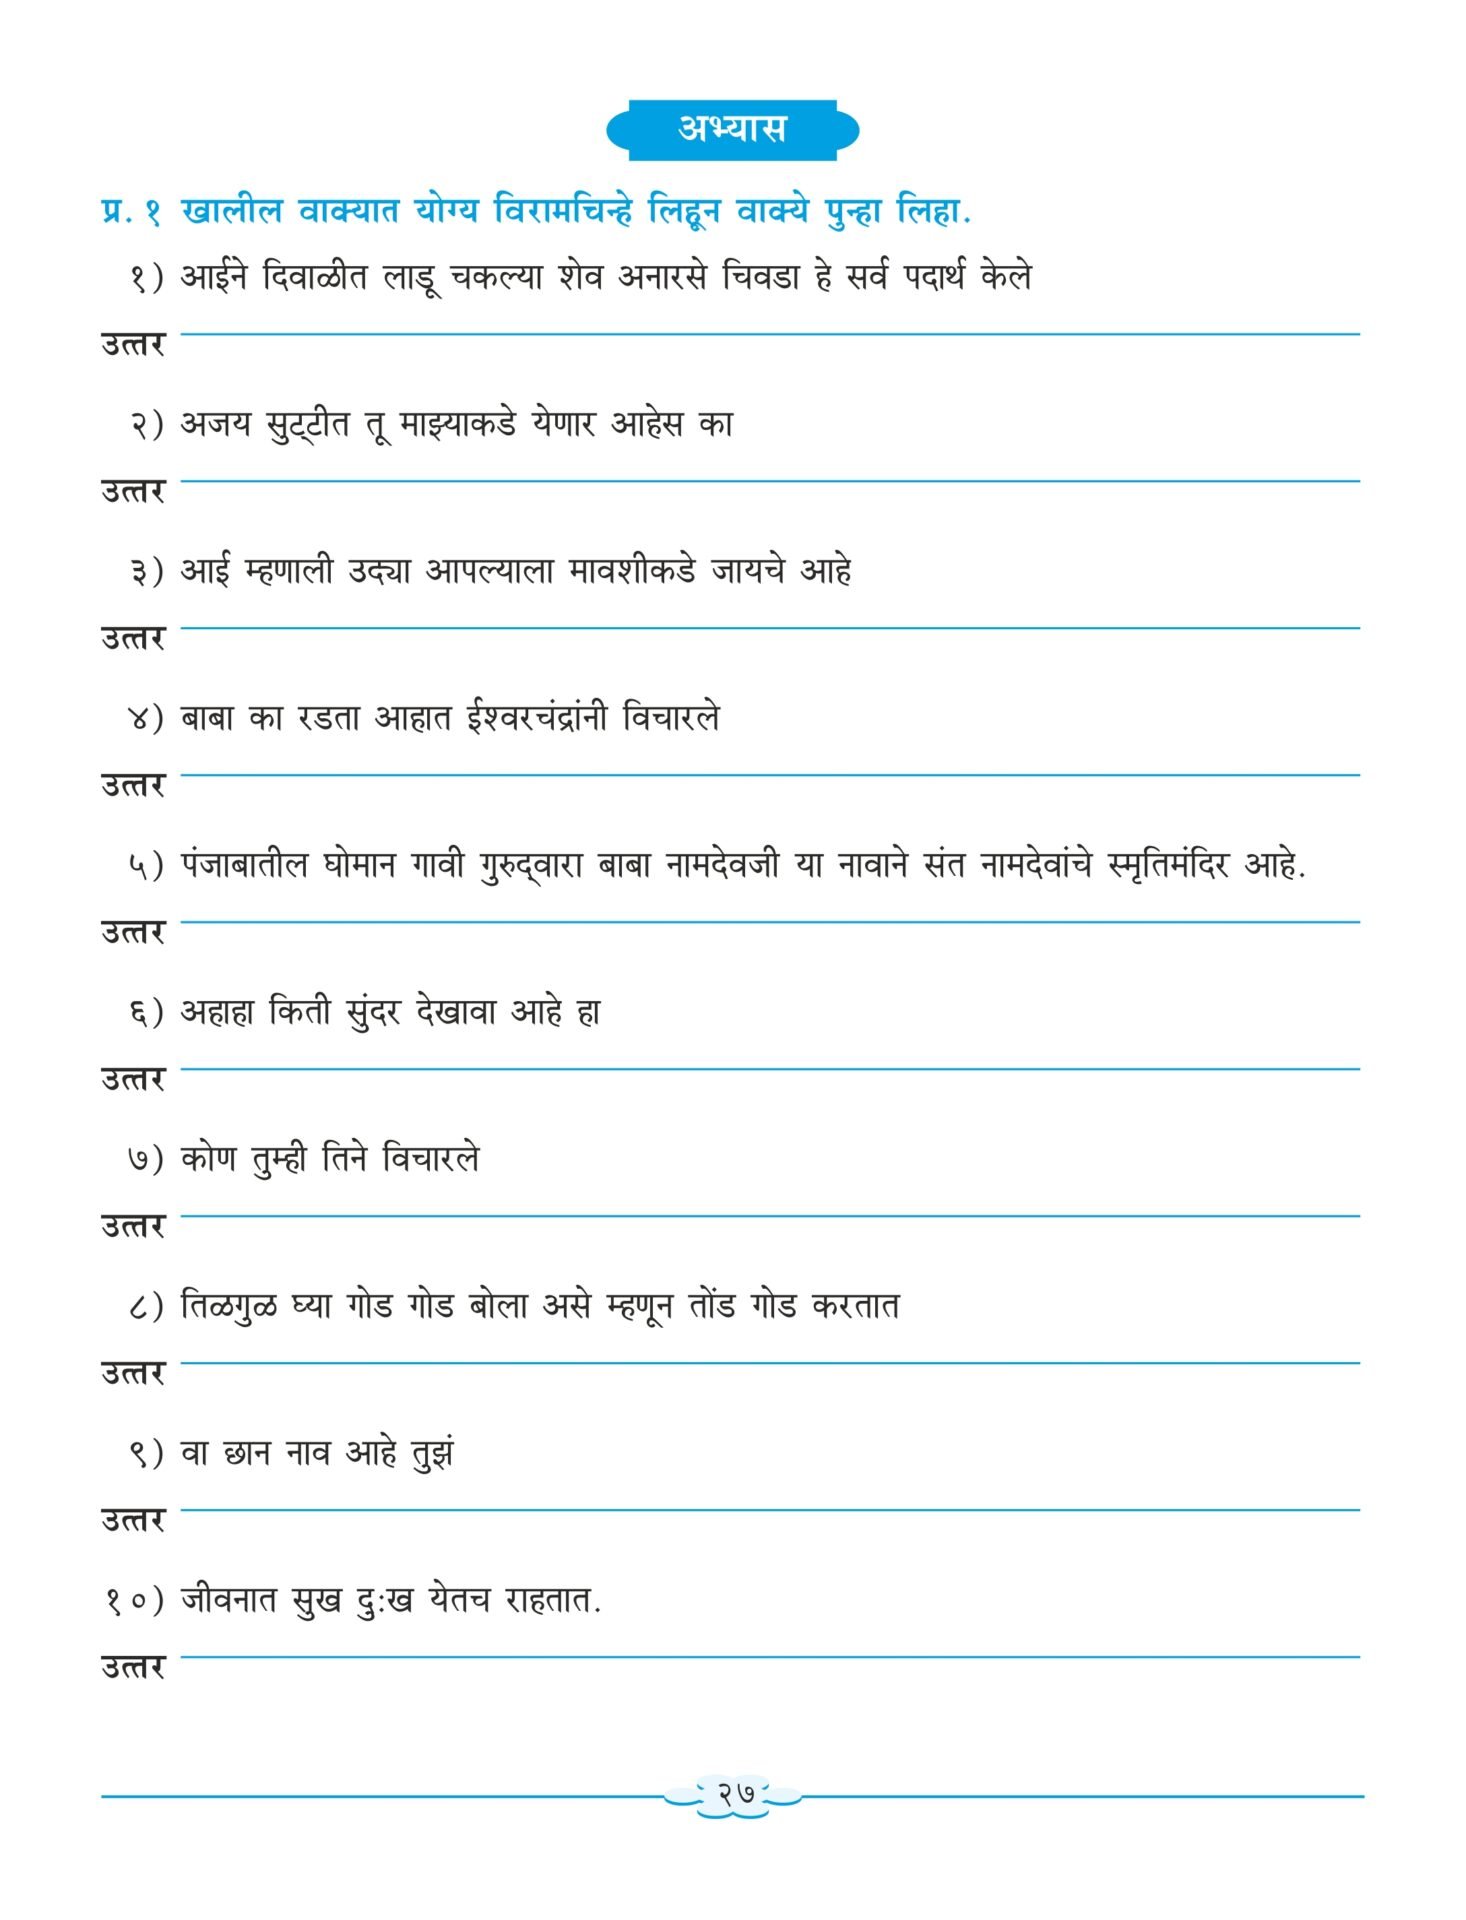 Nigam Marathi Sulabhbharati Grammar And Writing Skills Standard 6 5